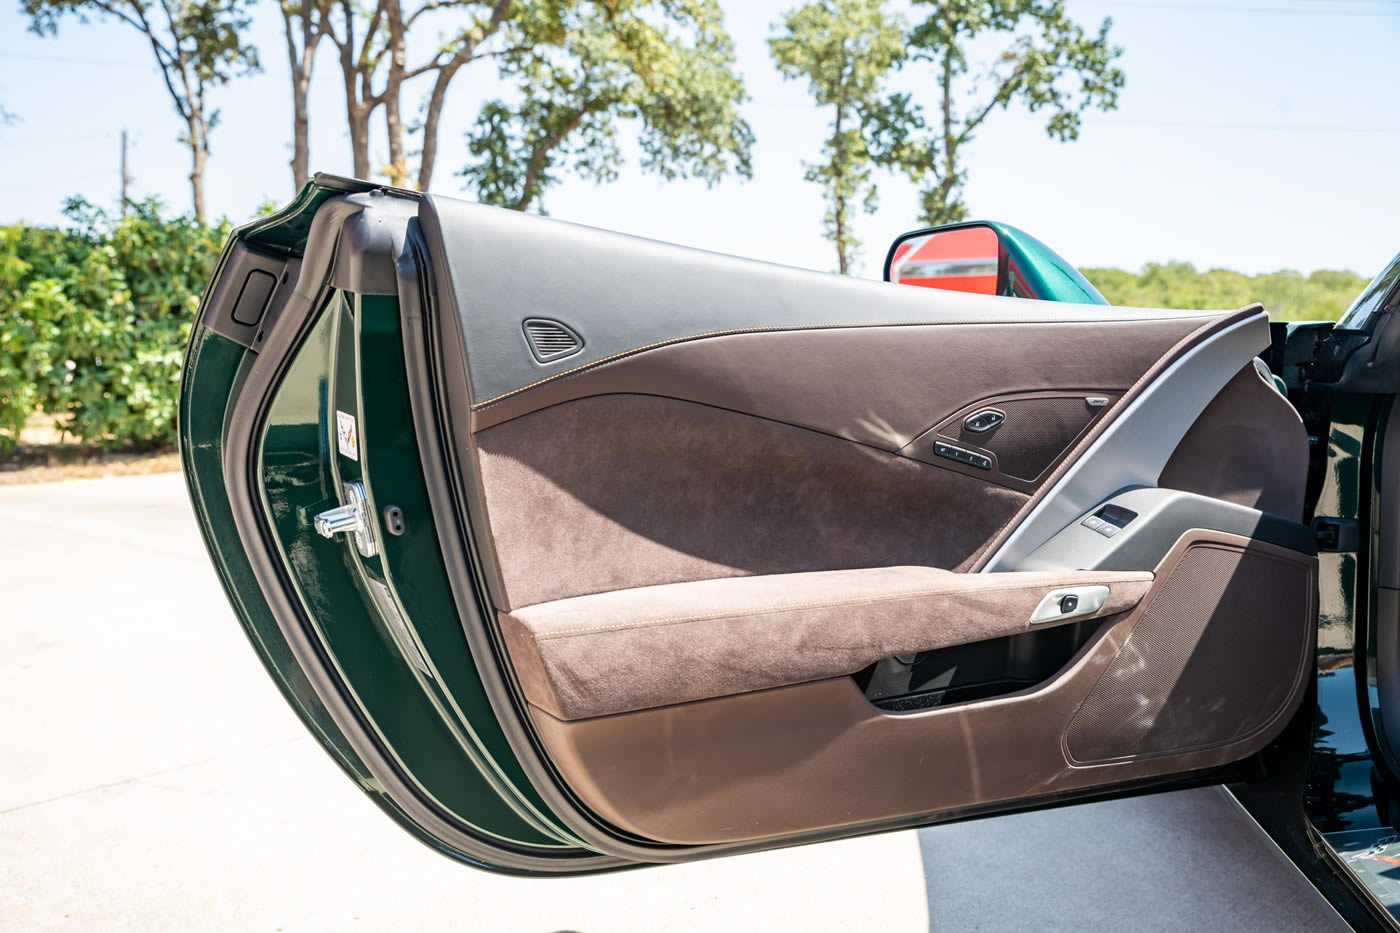 2014 Corvette Stingray Premiere Edition Convertible in Lime Rock Green Metallic